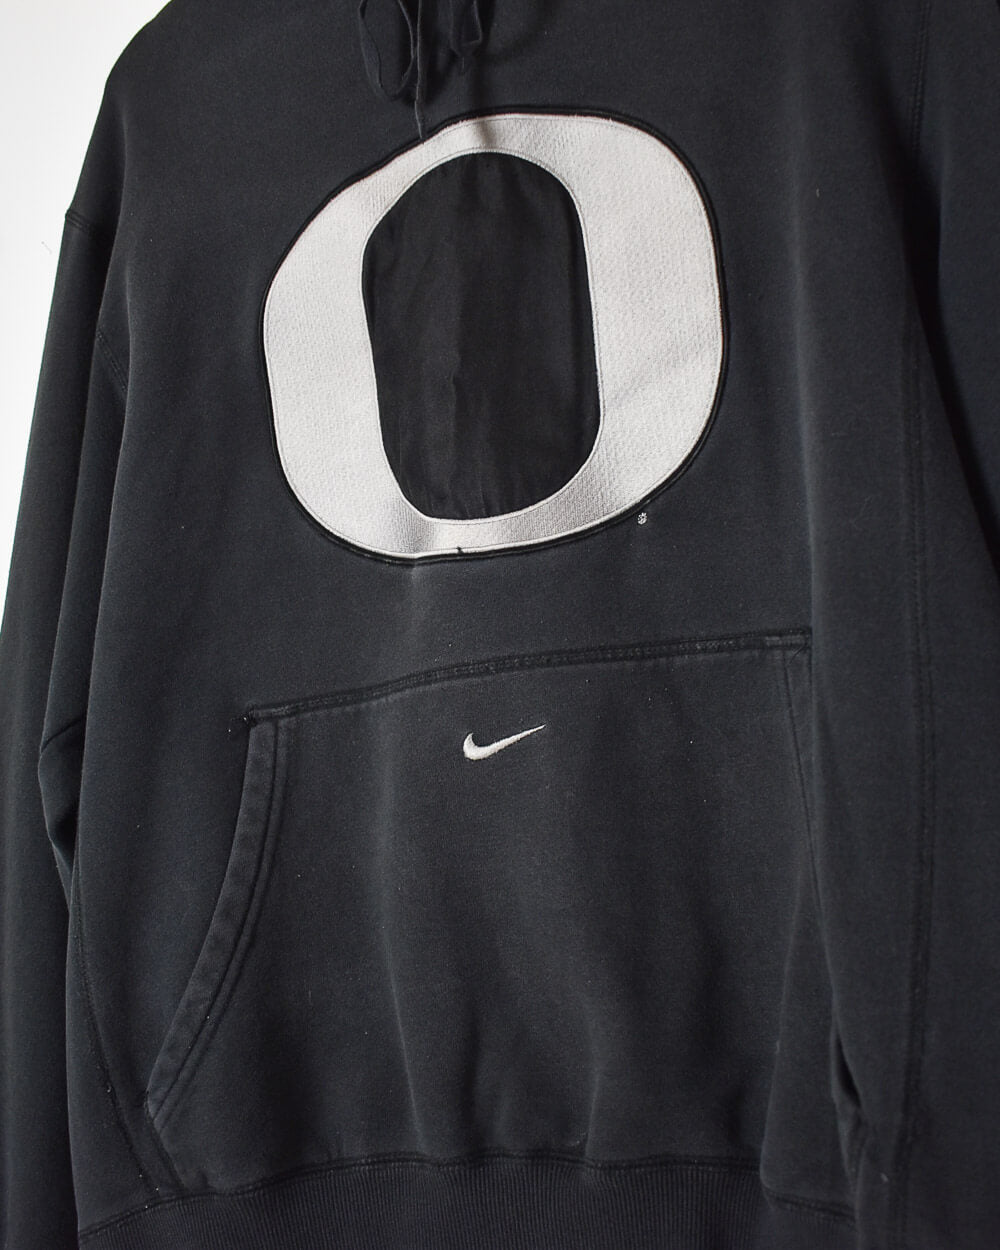 Black Nike Oregon Hoodie - Medium